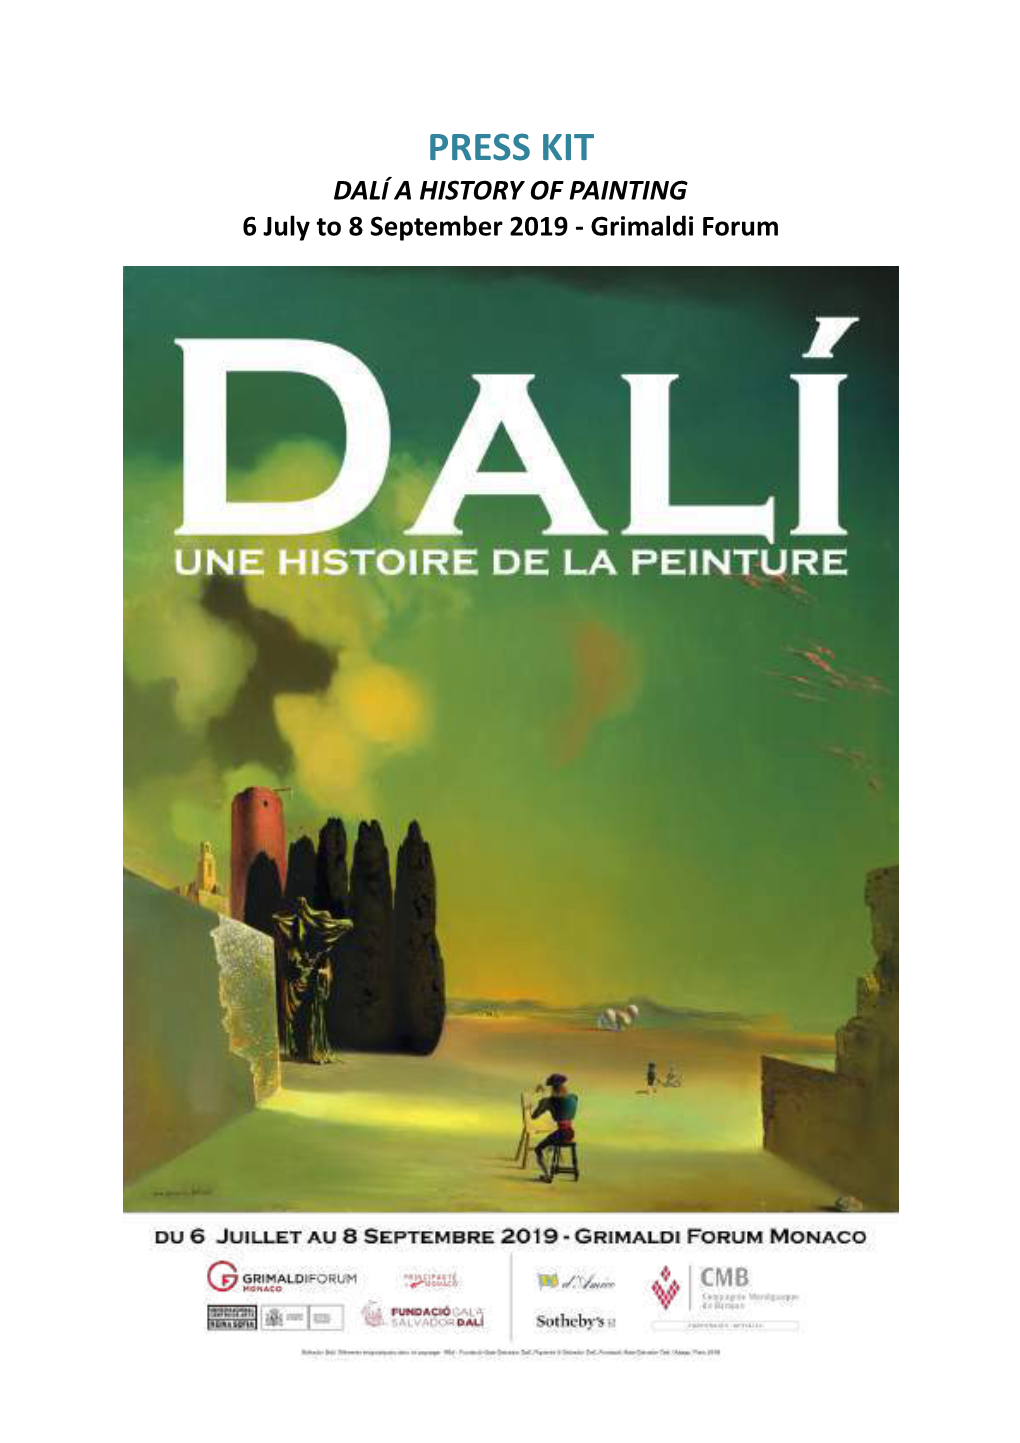 The Gala-Salvador Dalí Foundation